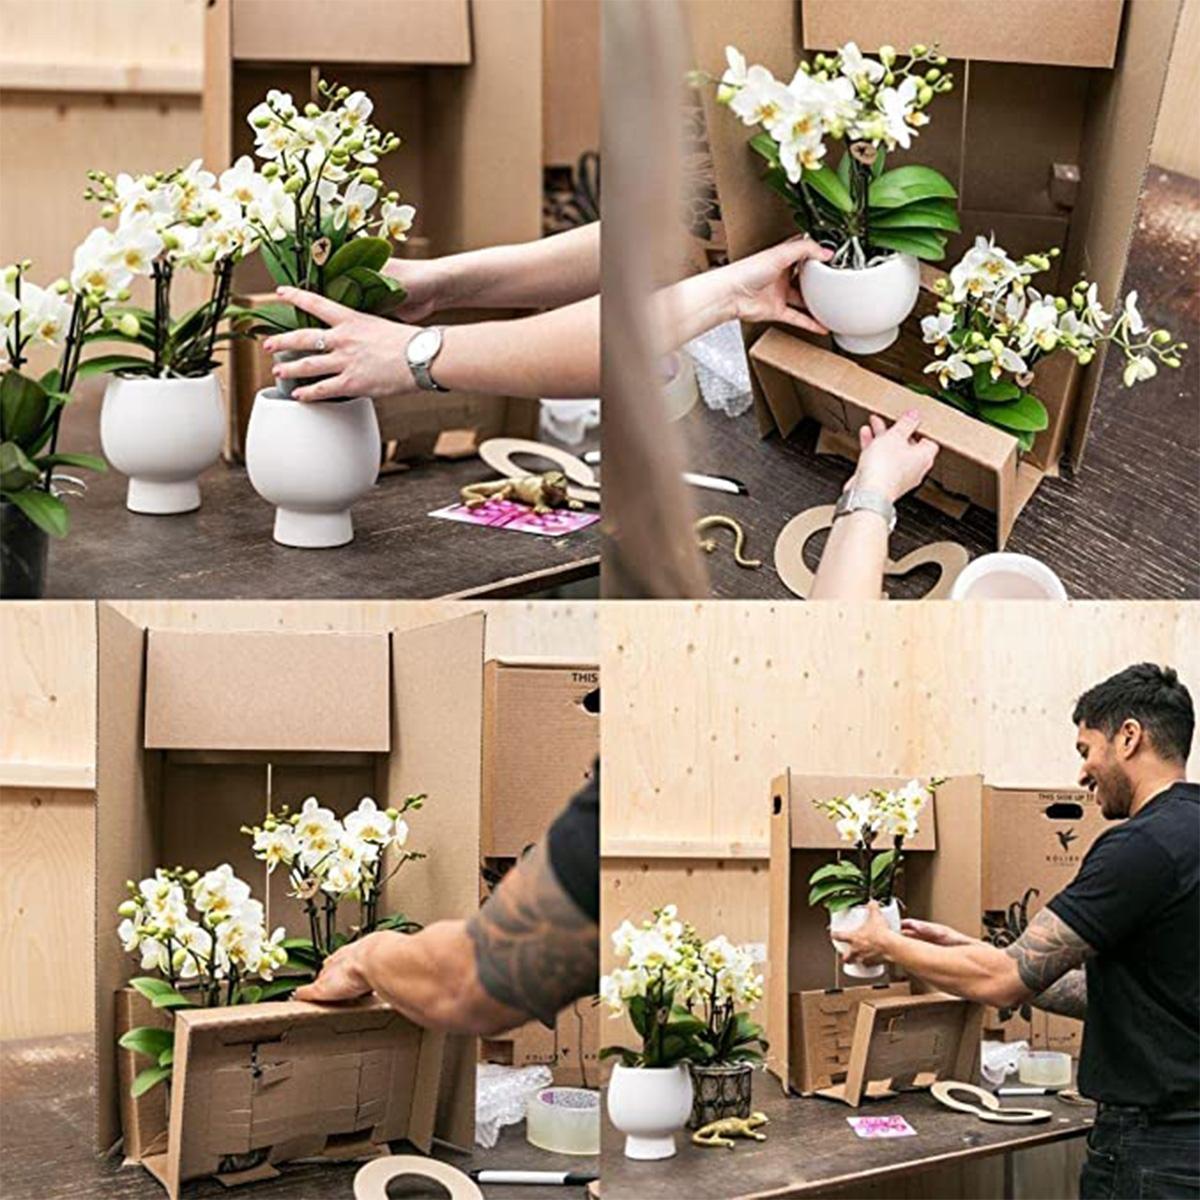 Kolibri Company | Gift set Scandic white | Plantenset met witte Phalaenopsis Orchidee en Succulenten incl. keramieken sierpotten